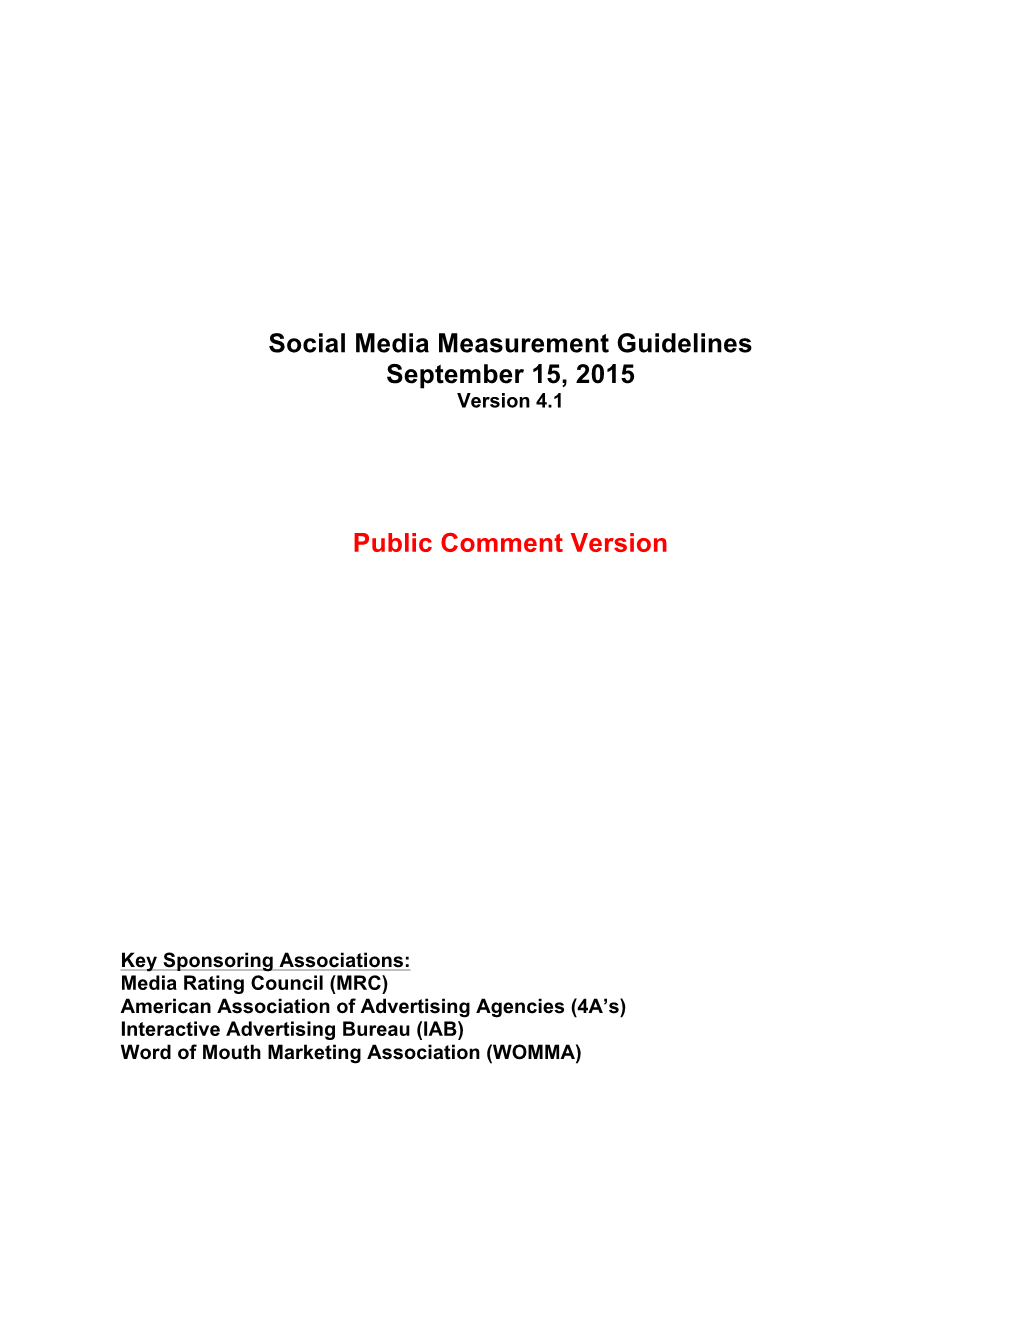 Social Media Measurement Guidelines September 15, 2015 Version 4.1